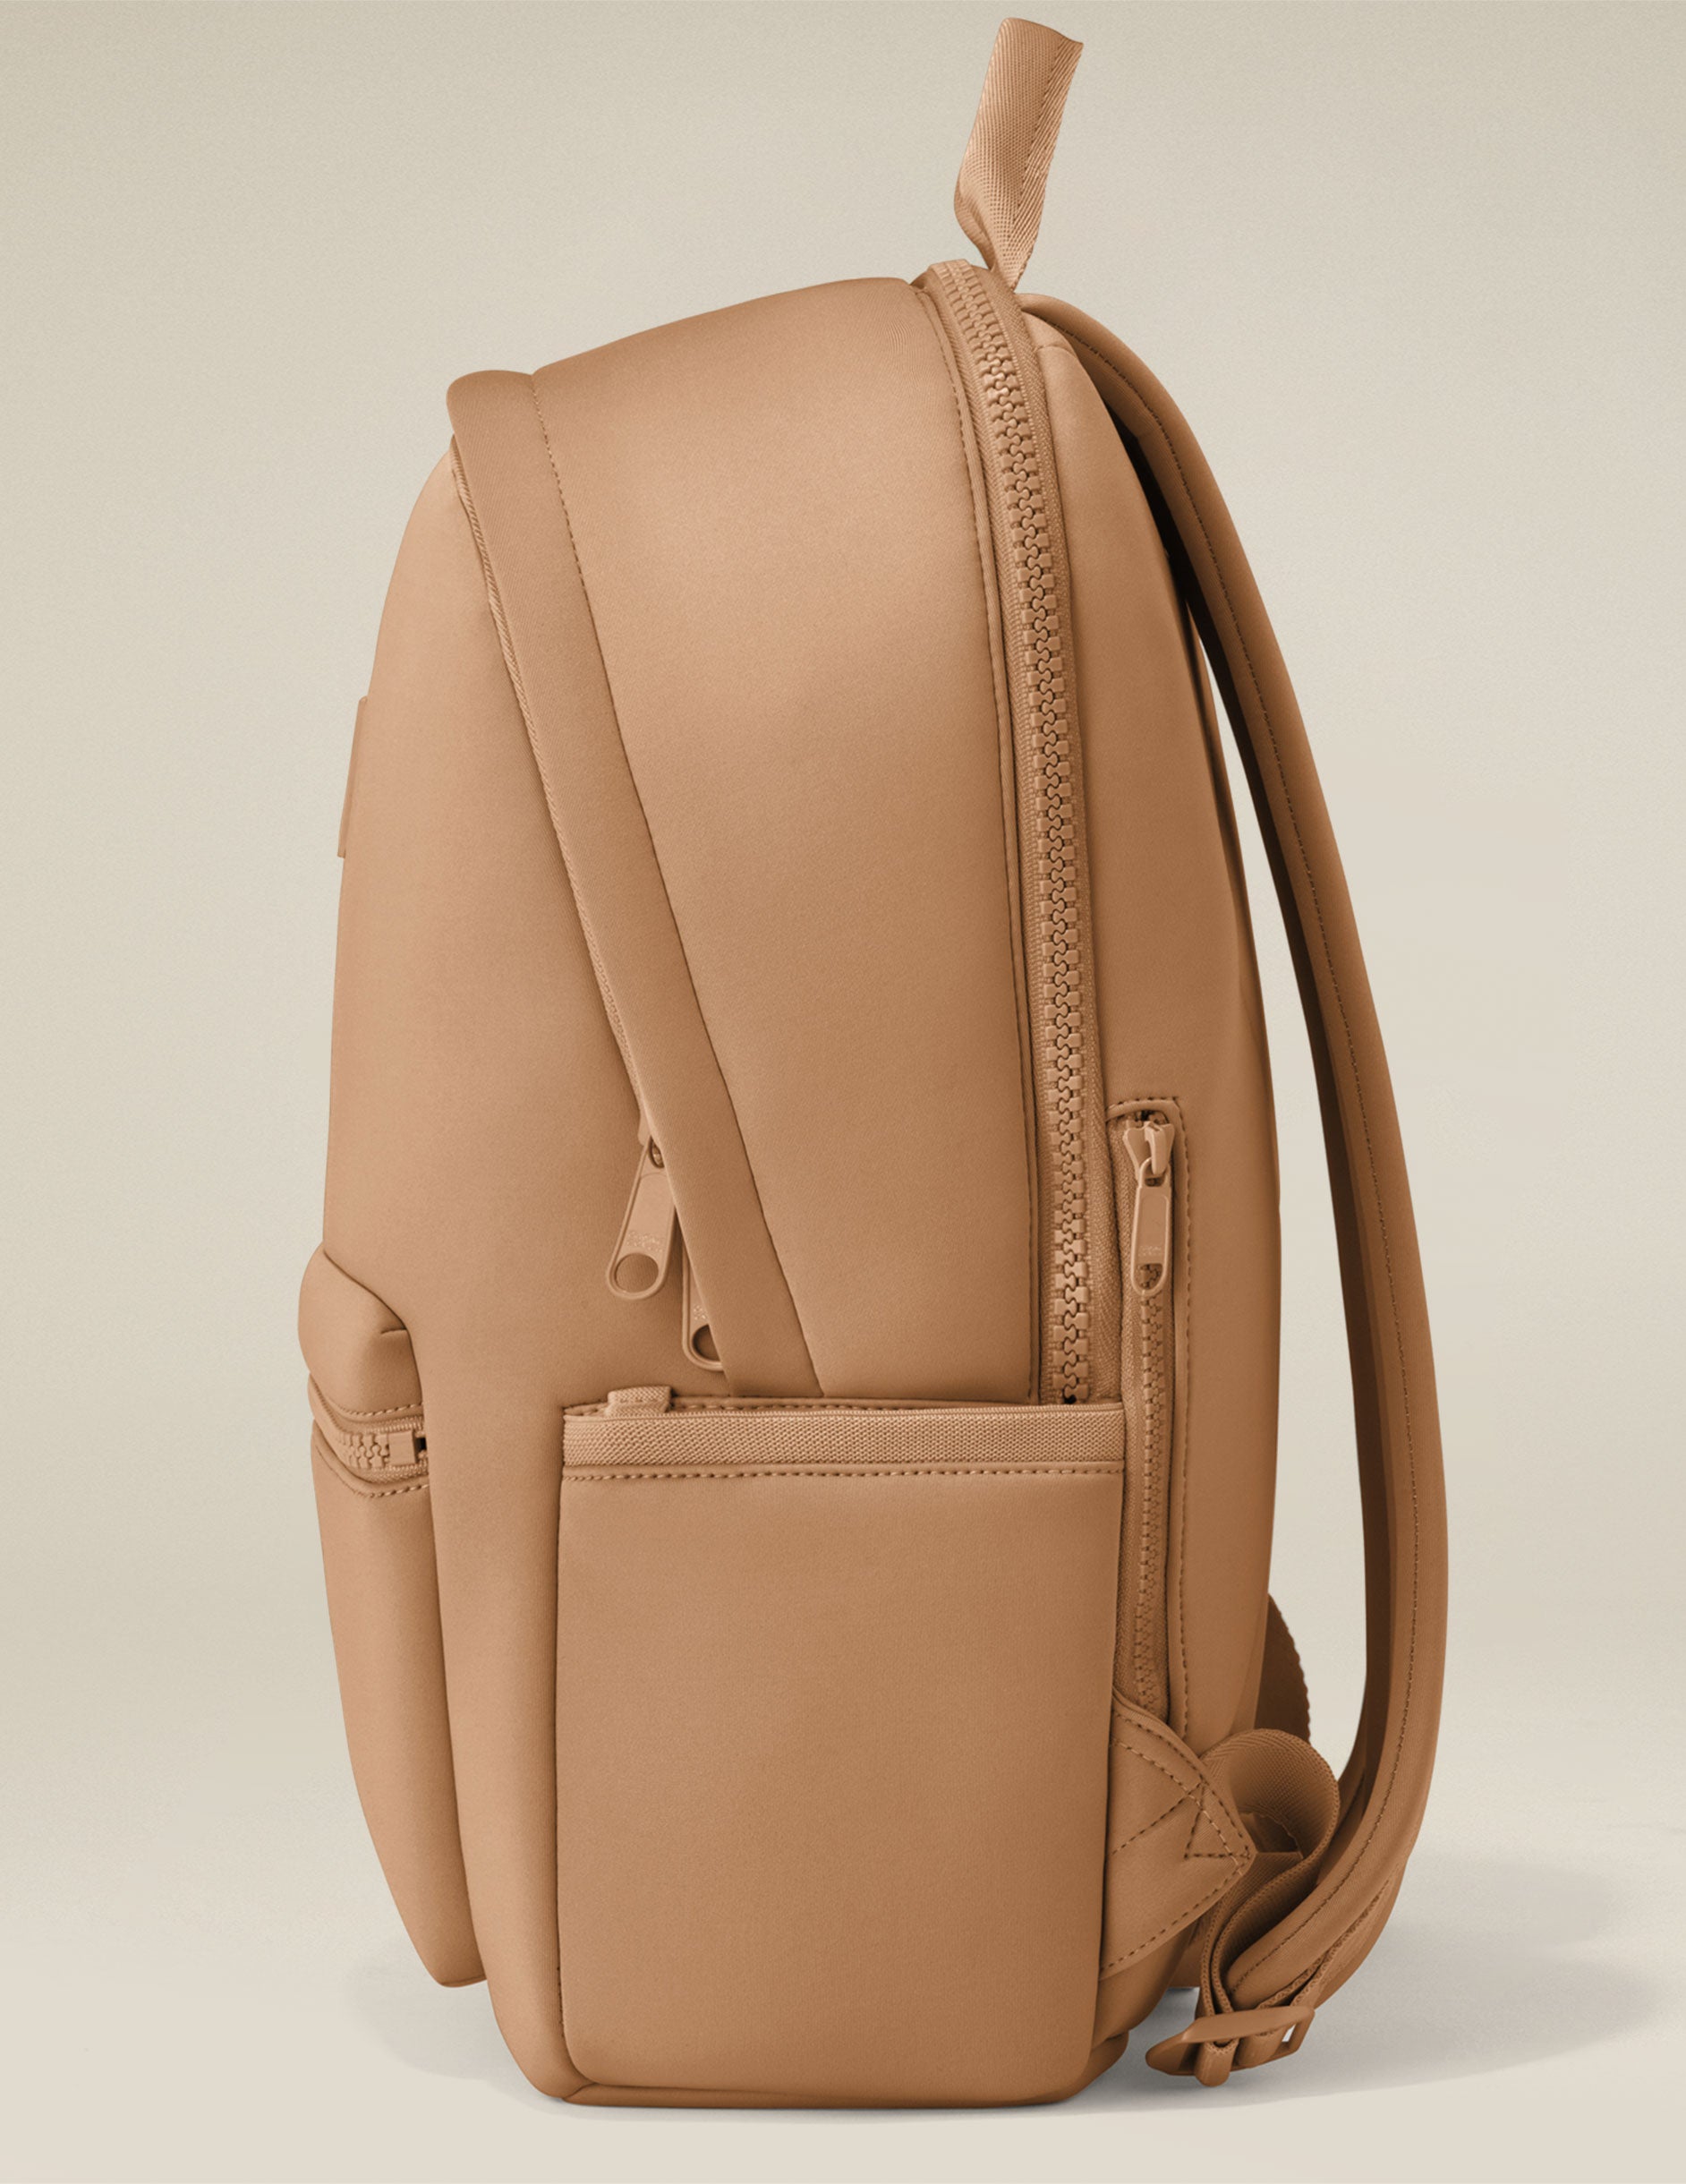 brown dagne dover backpack. 